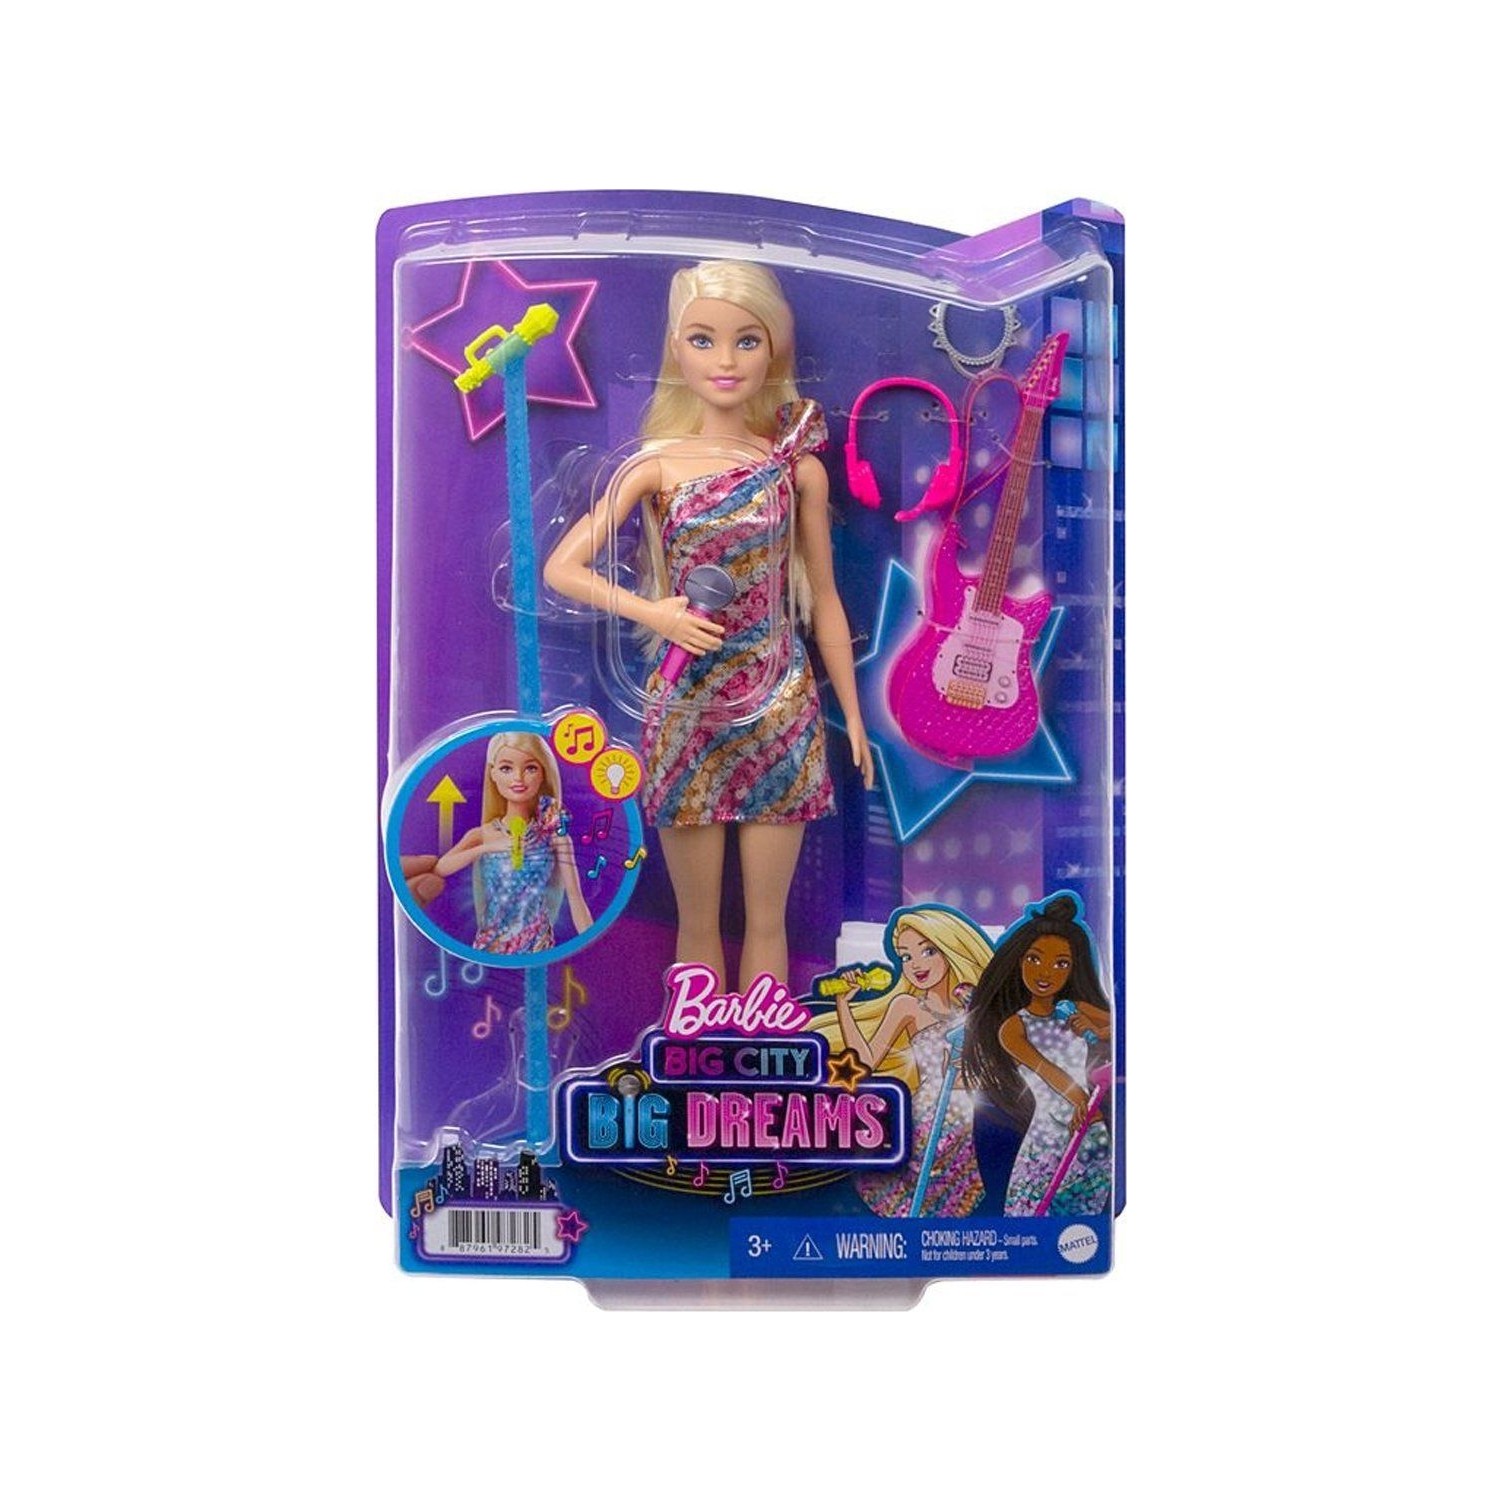 sztybor bartosz cyberpunk 2077 big city dreams Кукла Barbie Malibu Singer GYJ23